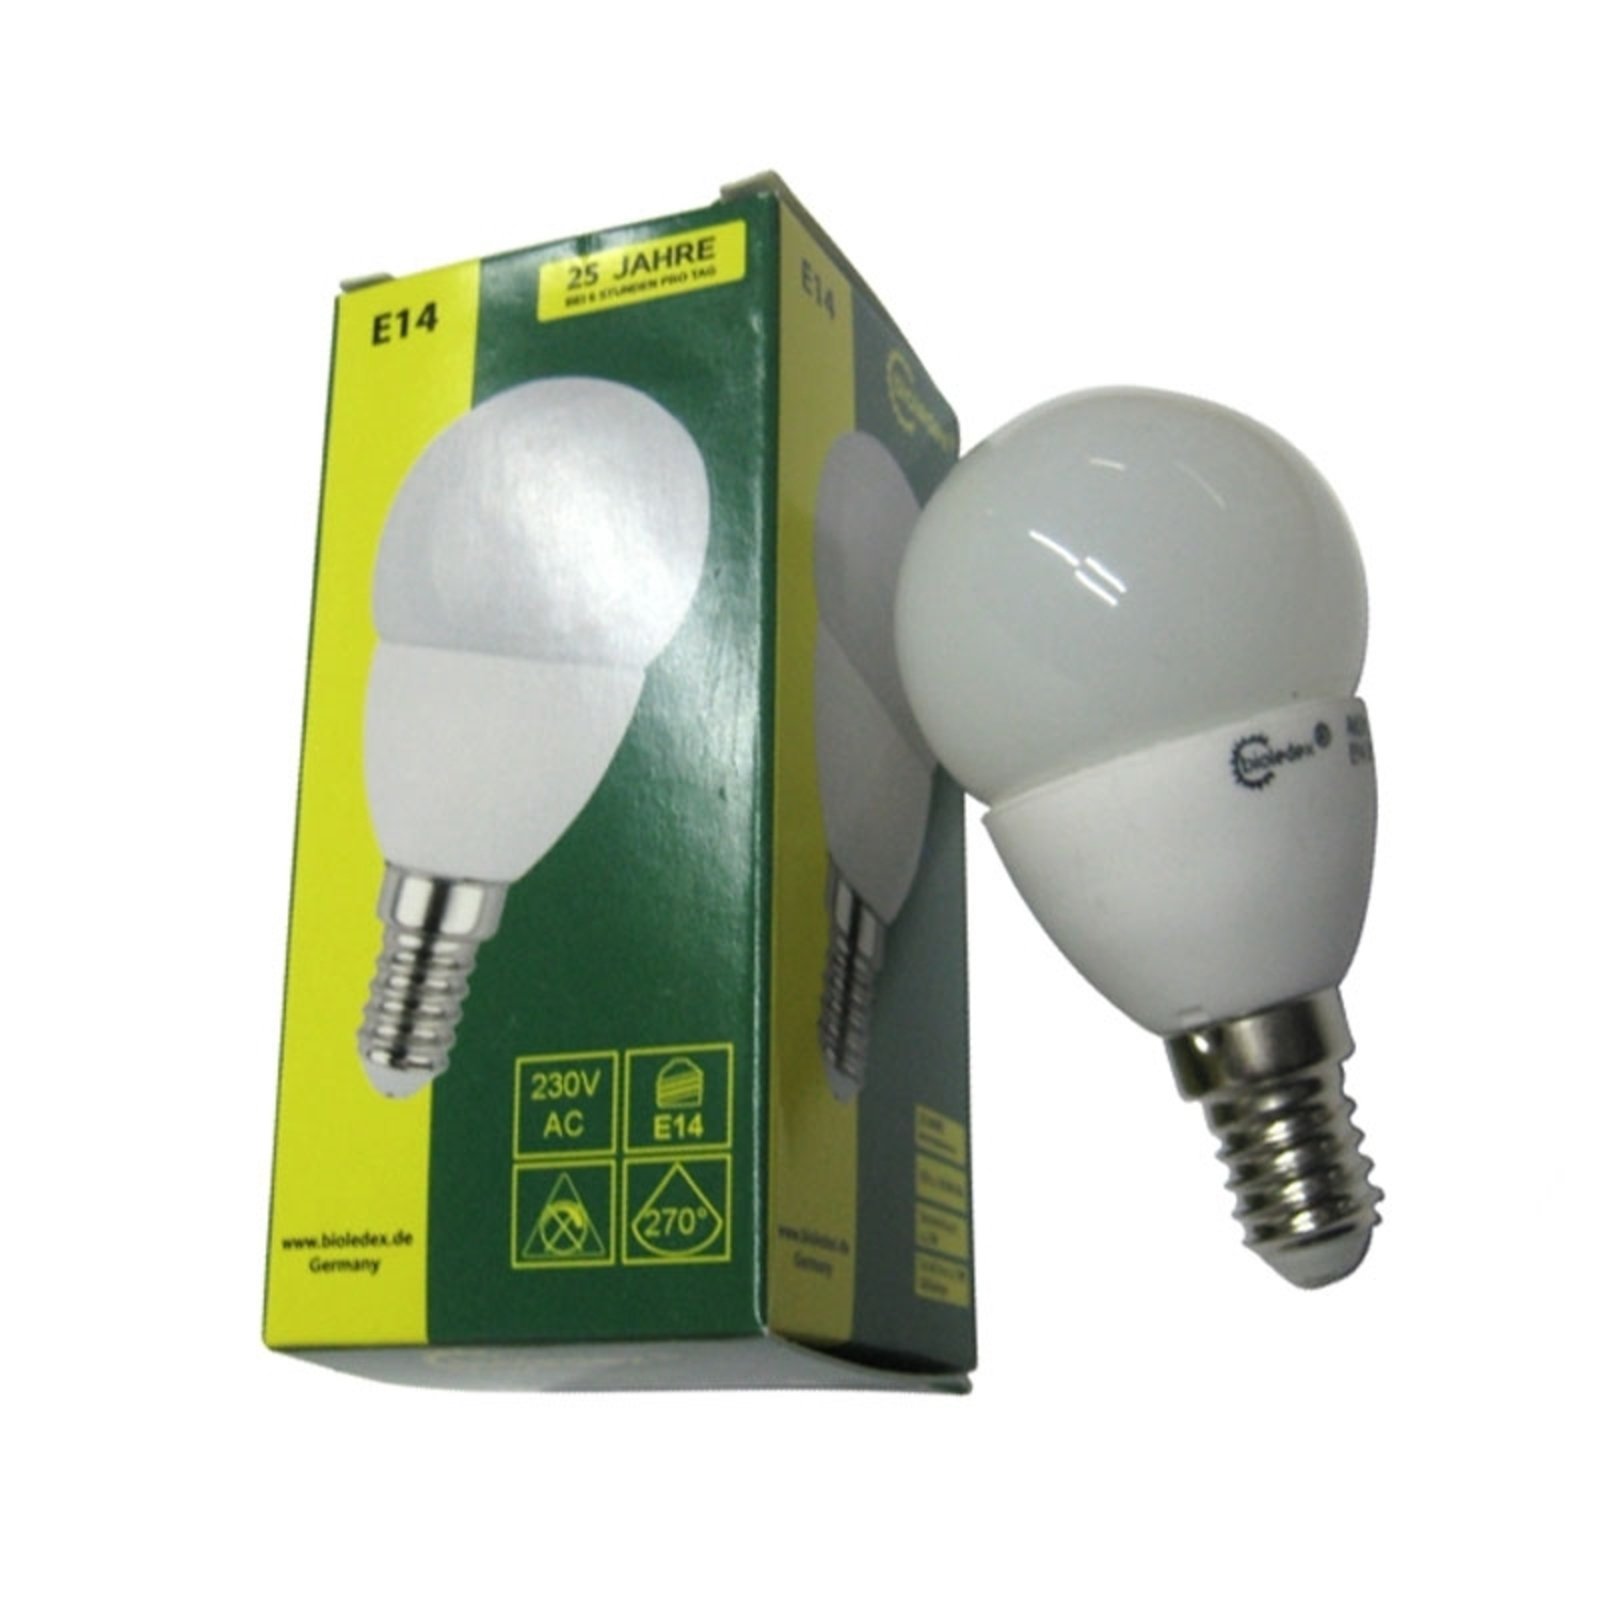 E14 3W LED light bulb Tema in tear form